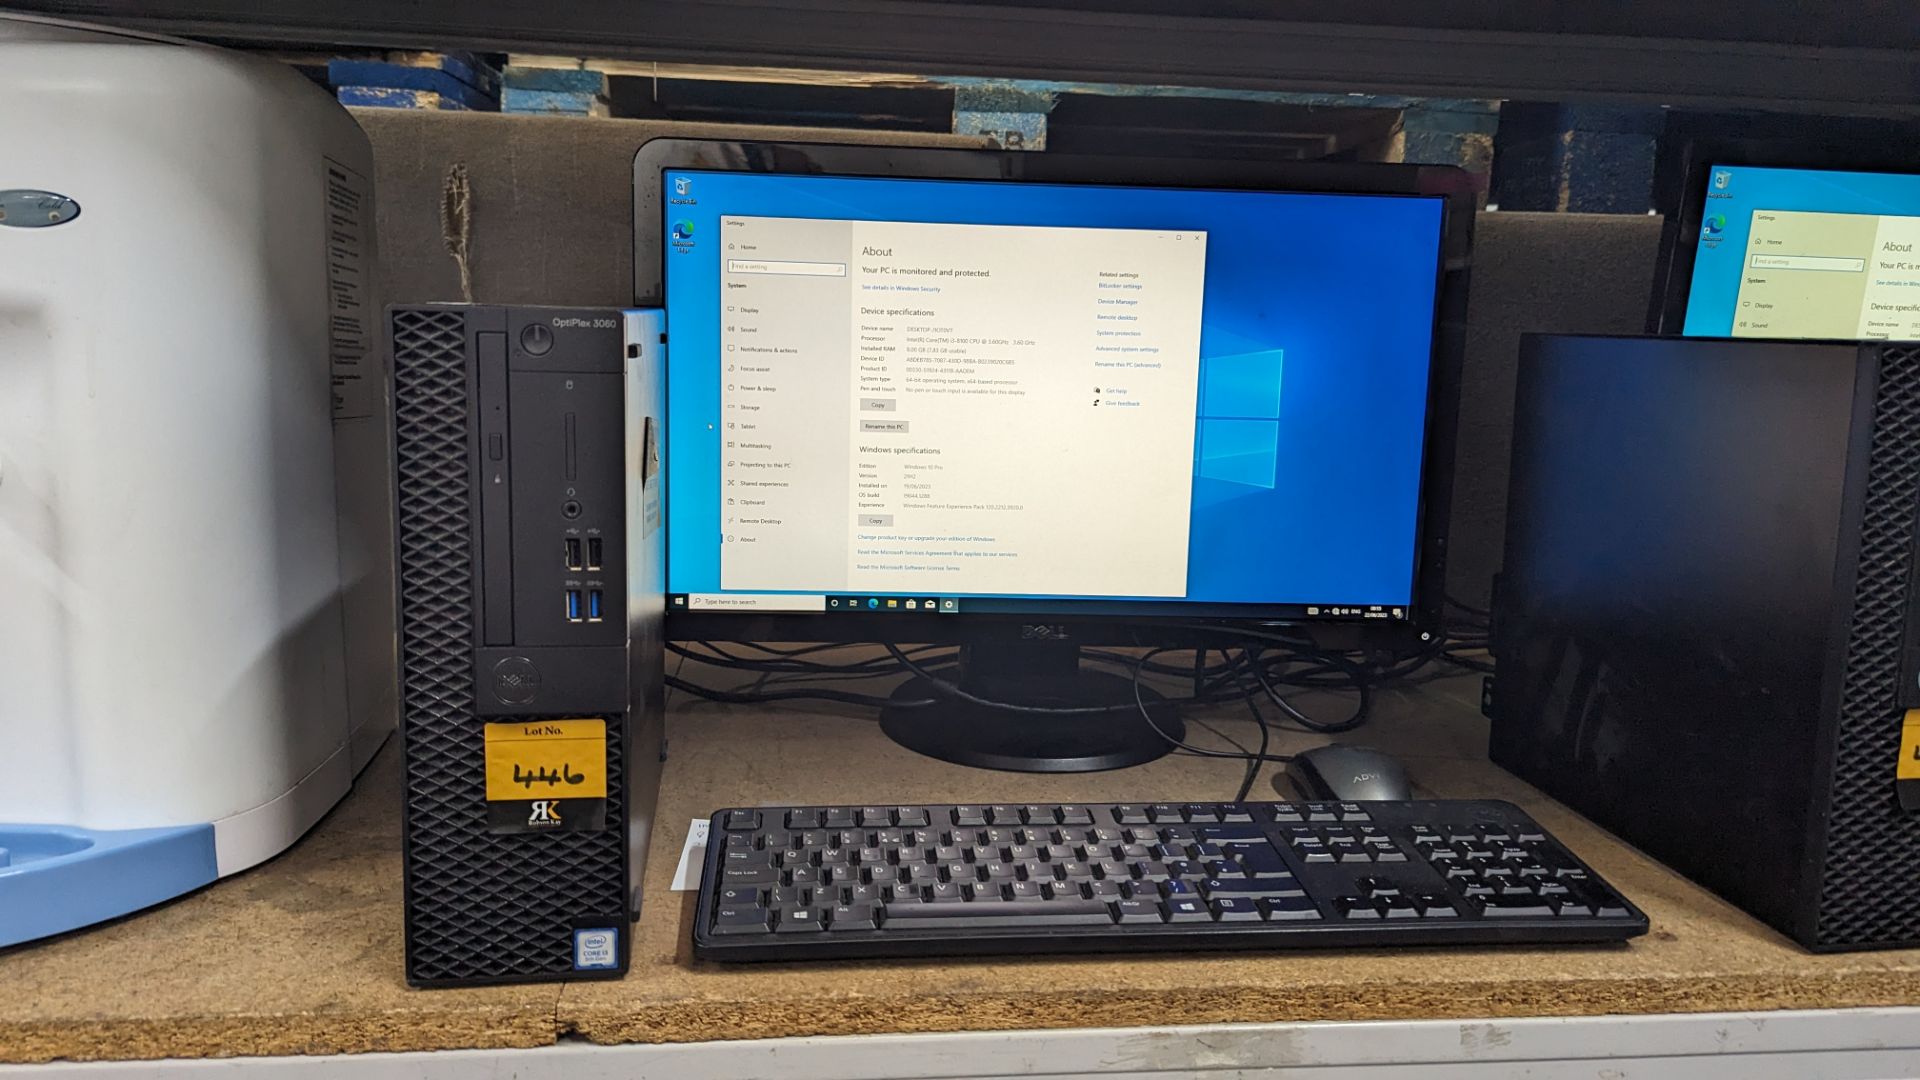 Dell OptiPlex 3060 compact desktop computer with Intel Core i3 8th Gen processor, 8GB RAM, 250GB SSD